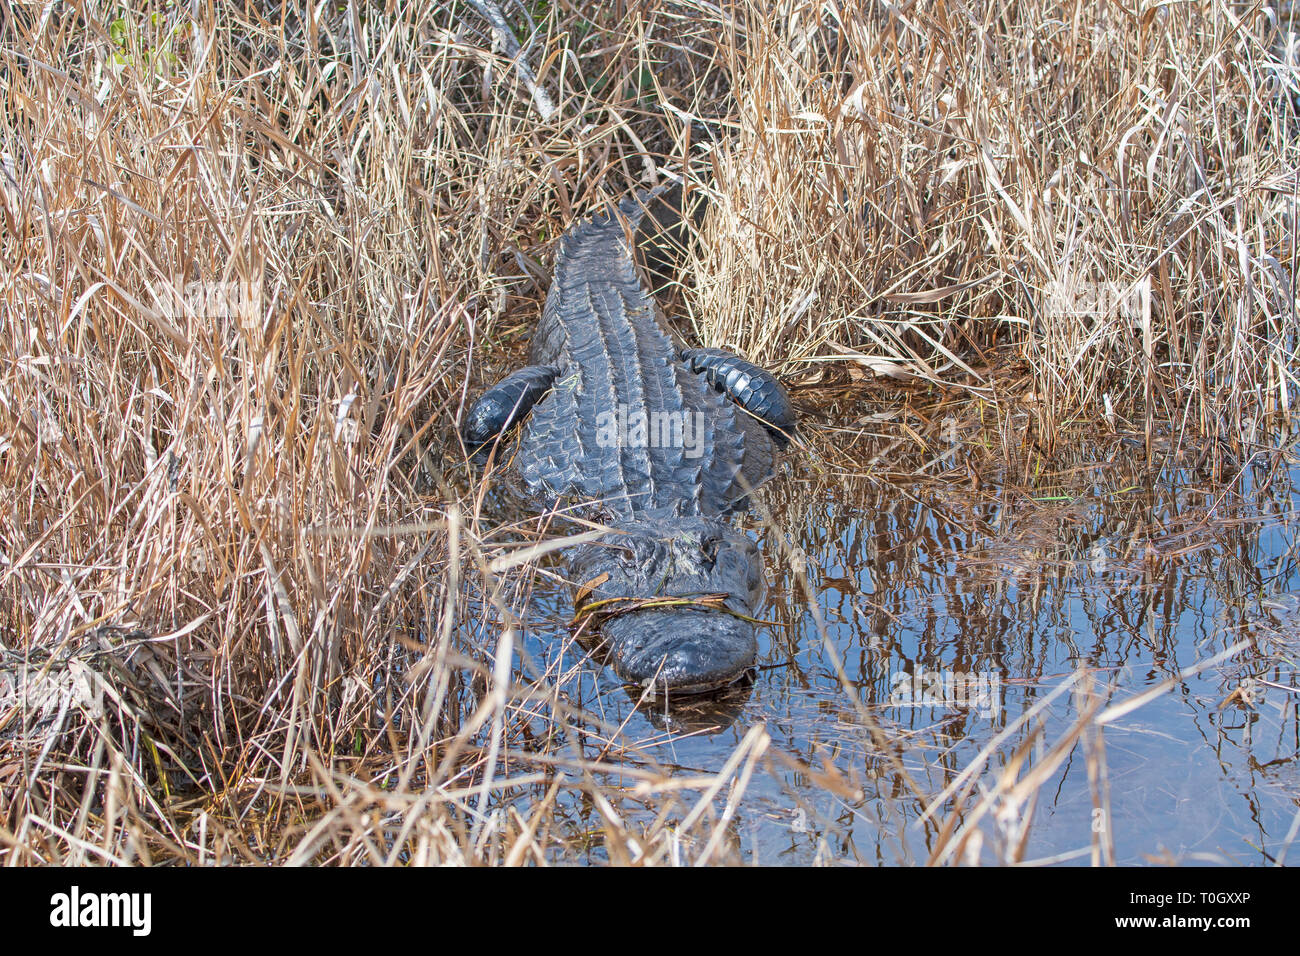 American Alligator Basking in the Marshland Grass in Okefenokee Swamp in Georgia Stock Photo